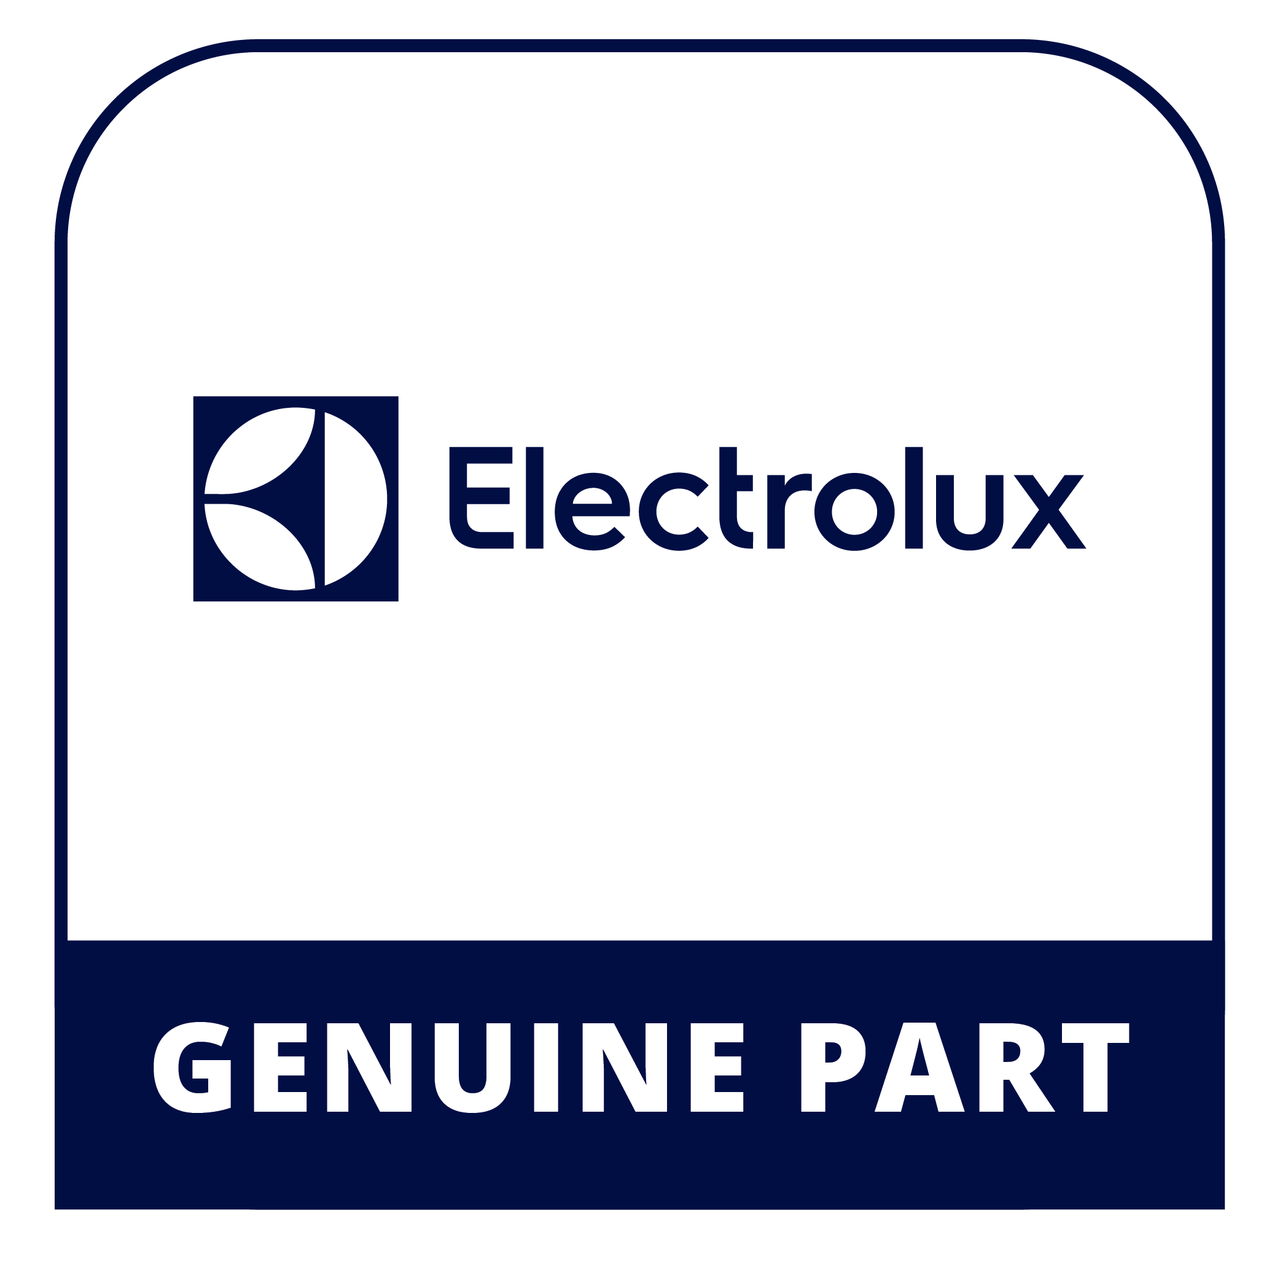 Frigidaire - Electrolux 5304501936 - Harness - Genuine Electrolux Part